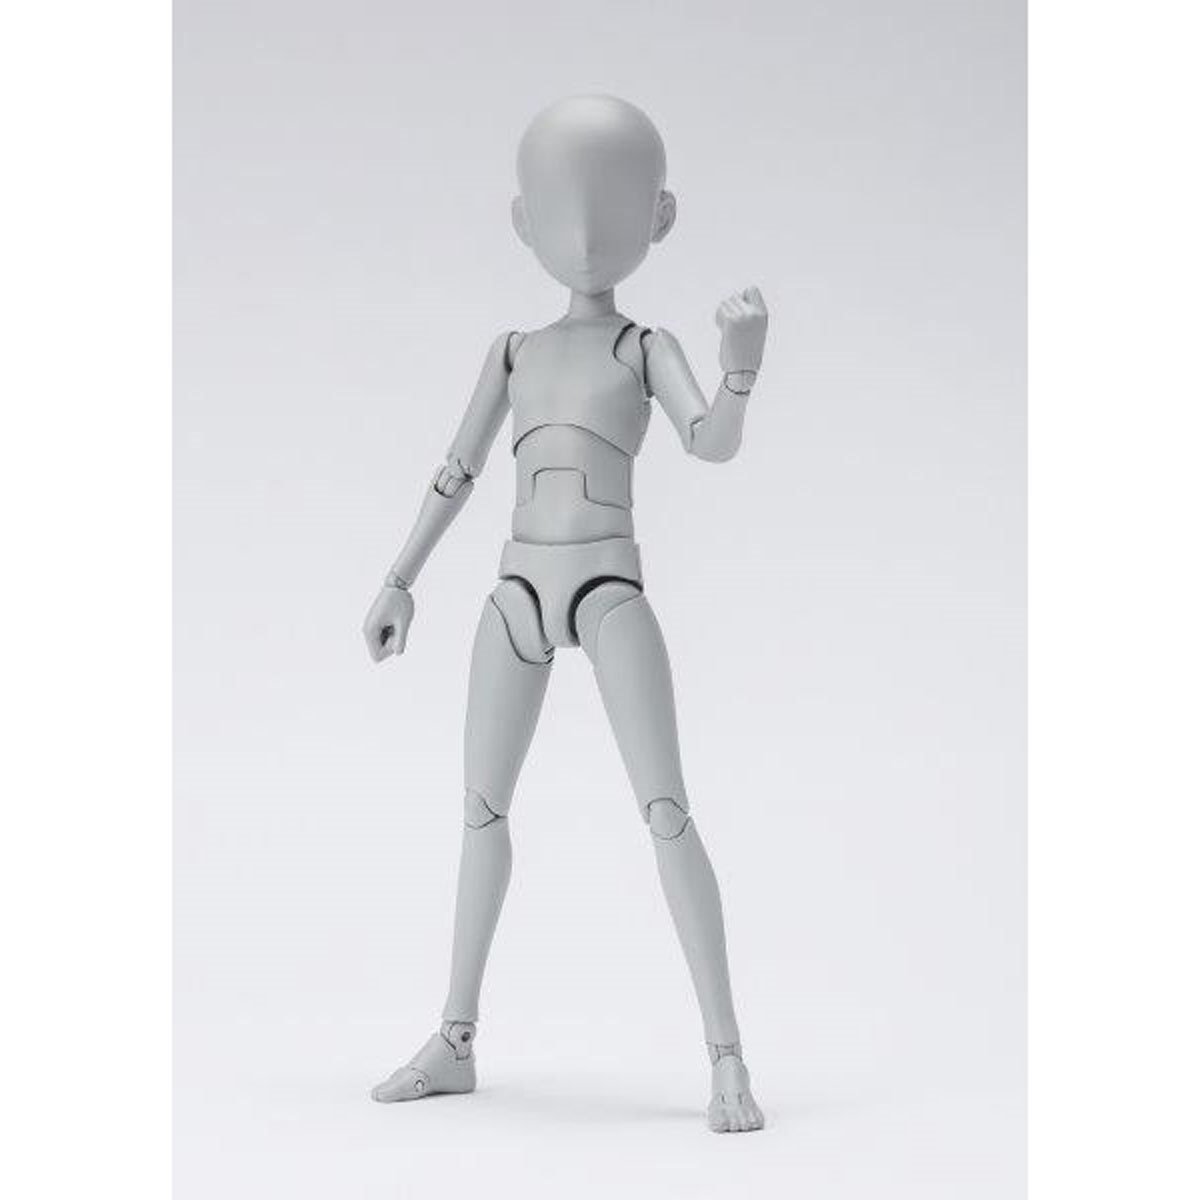 3 Colors Top S.H.Figuarts SHF BODY DX Set Ver Action Figure Model Stand Holder 